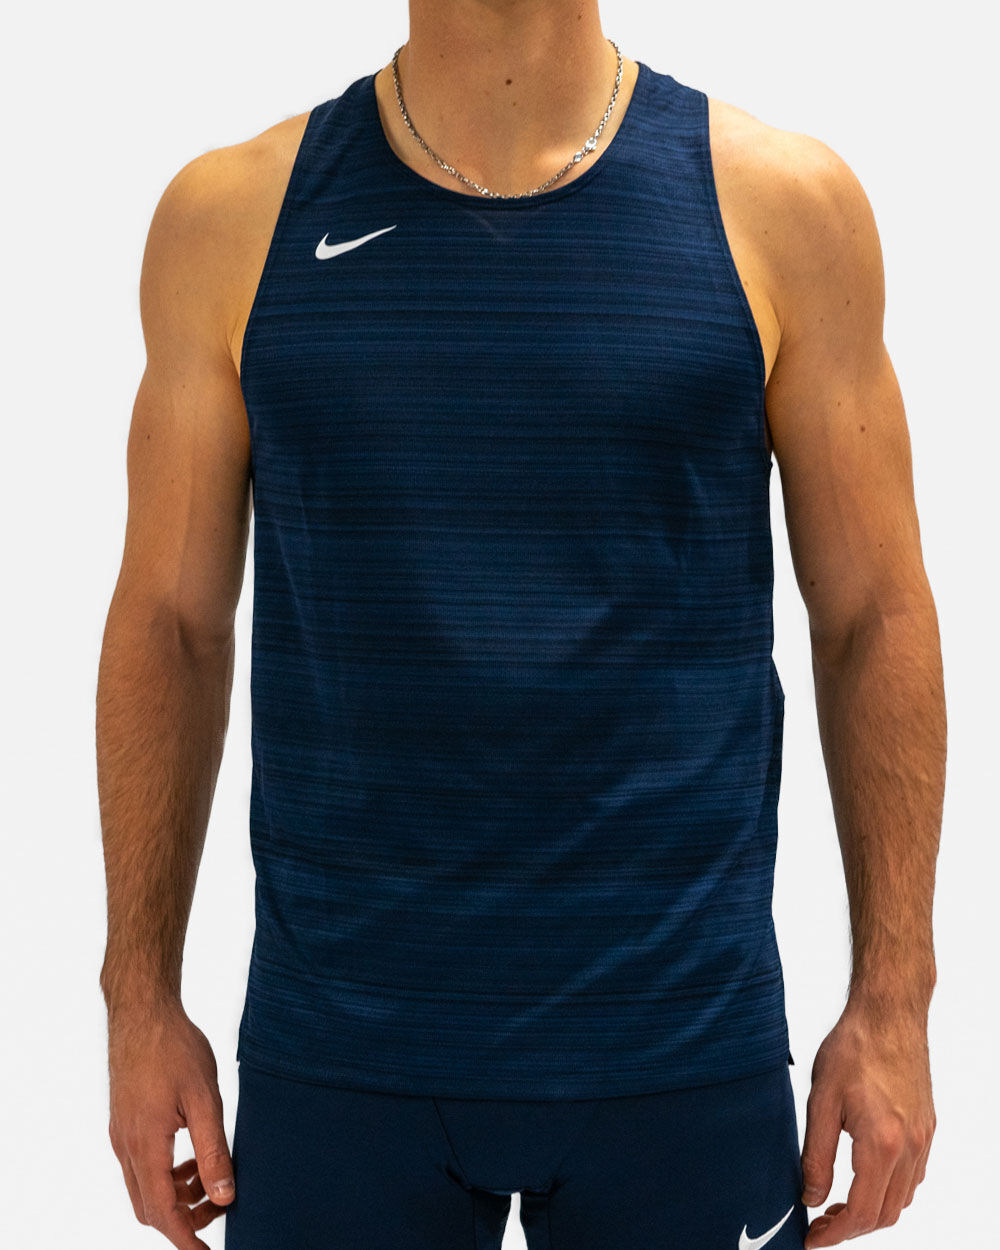 Camiseta sin mangas de running Nike Stock Azul Marino para Hombre - NT0300-451